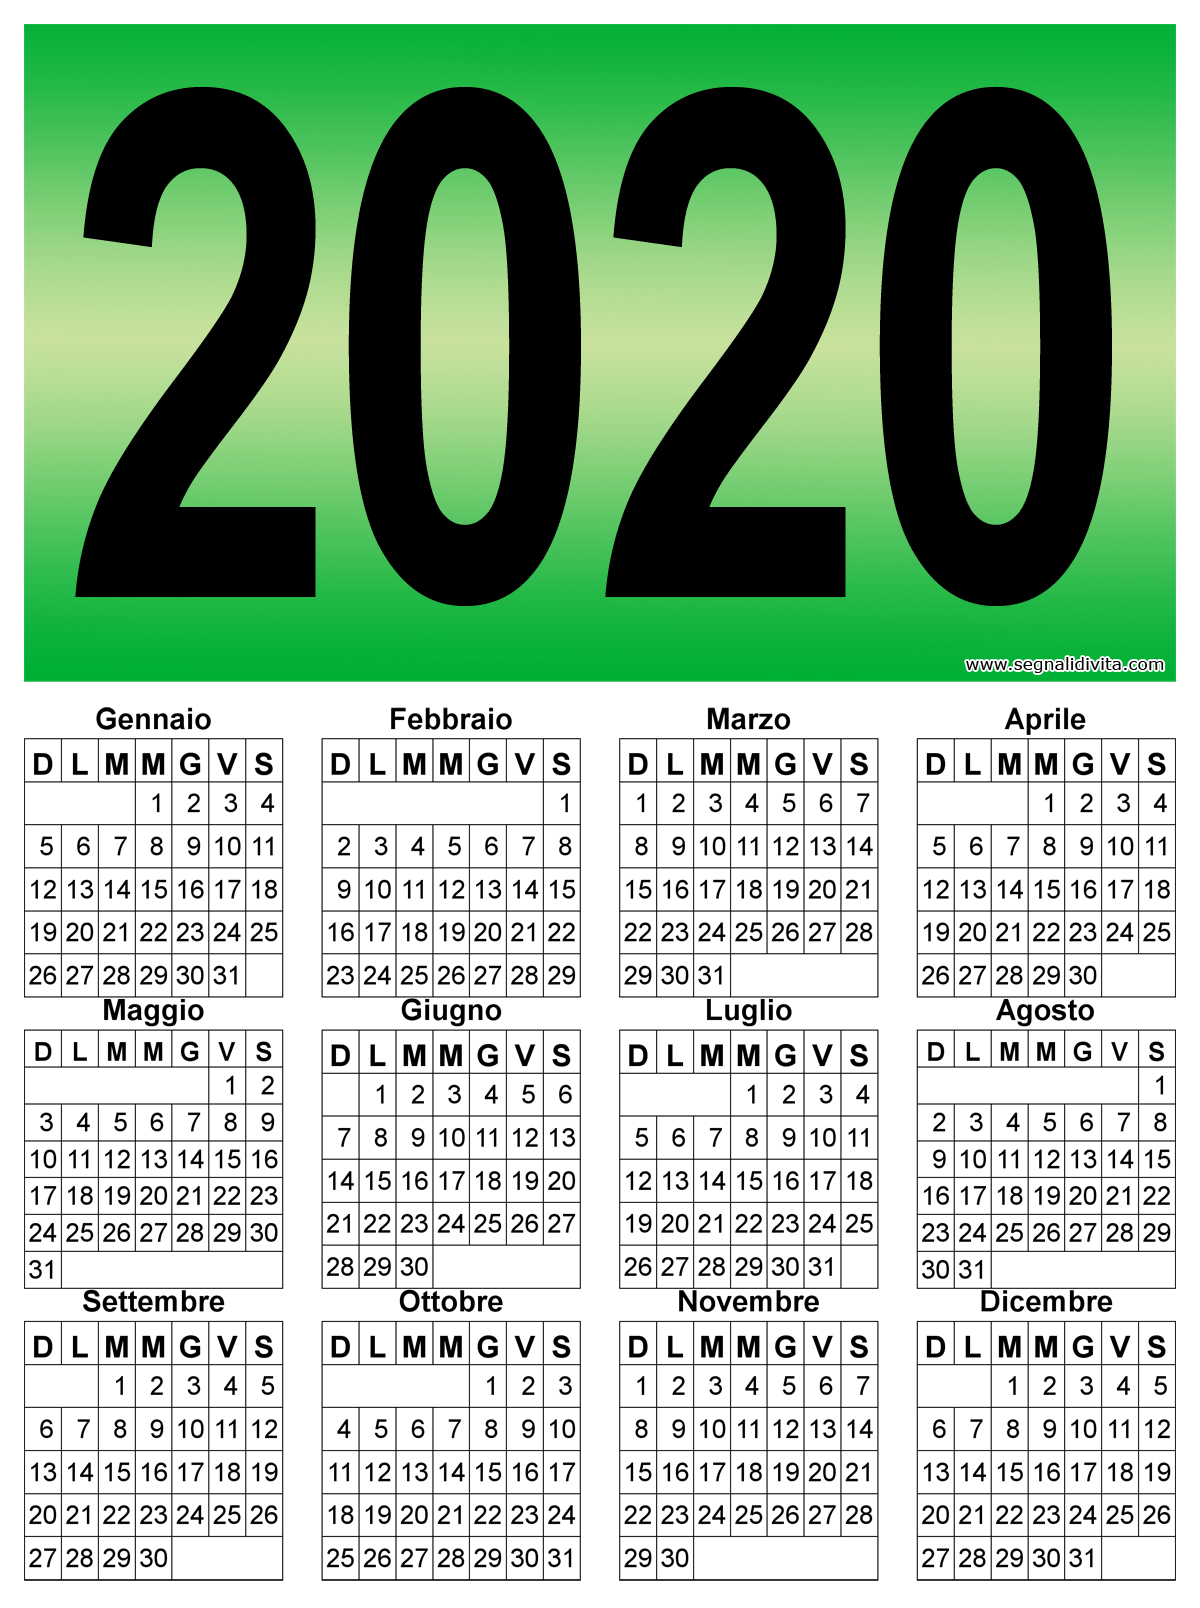 Calendario 2020 medio: 1200 x 1608 pixel